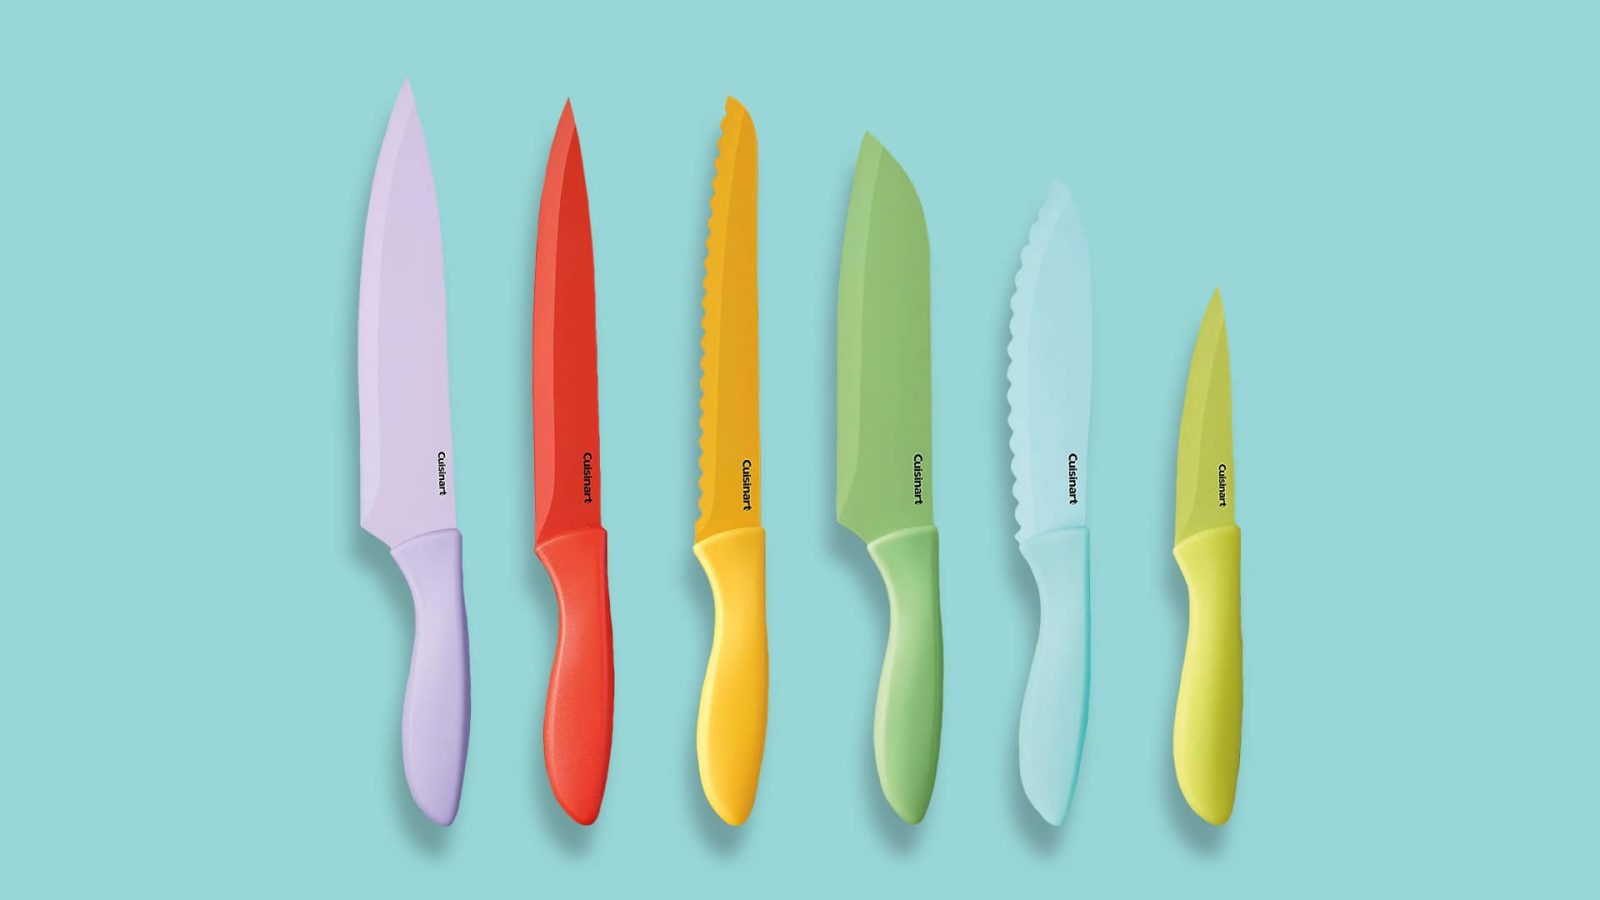 How To Sharpen Cuisinart Knives